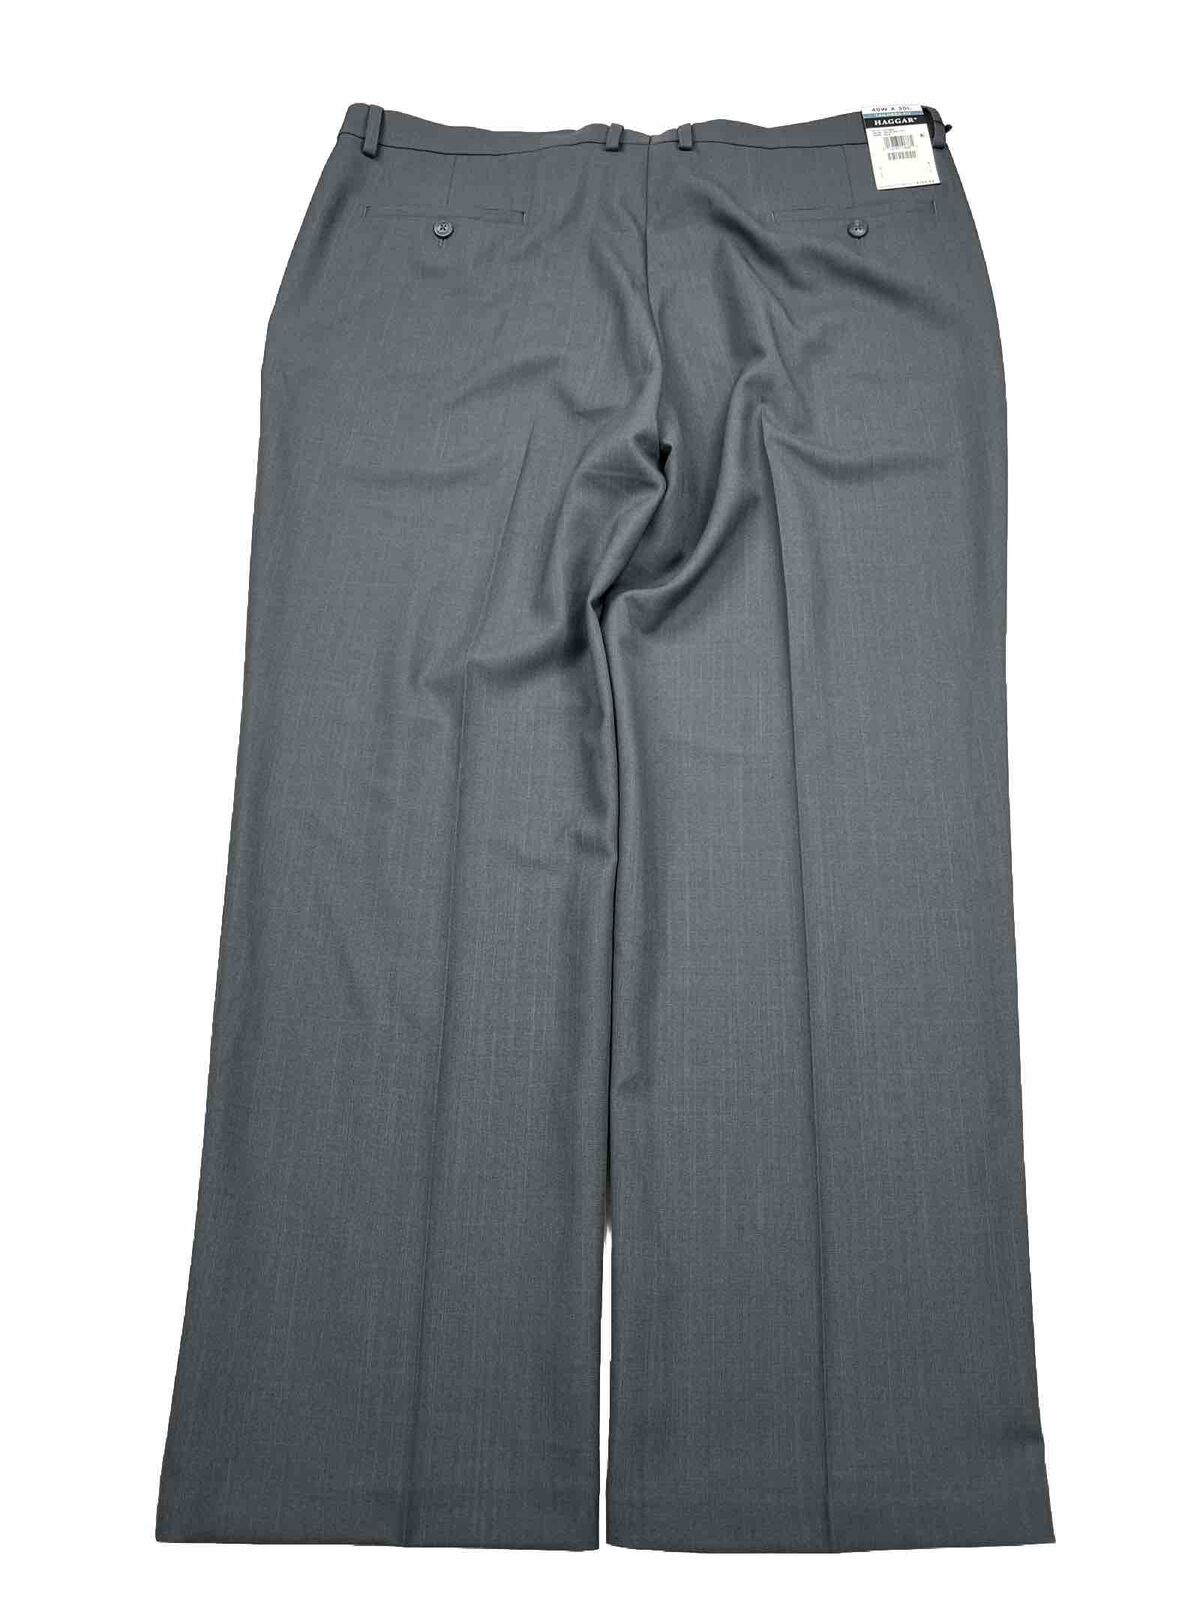 NEW Haggar Men's Gray Tailored Fit Flat Front Dress Pants - 40x30